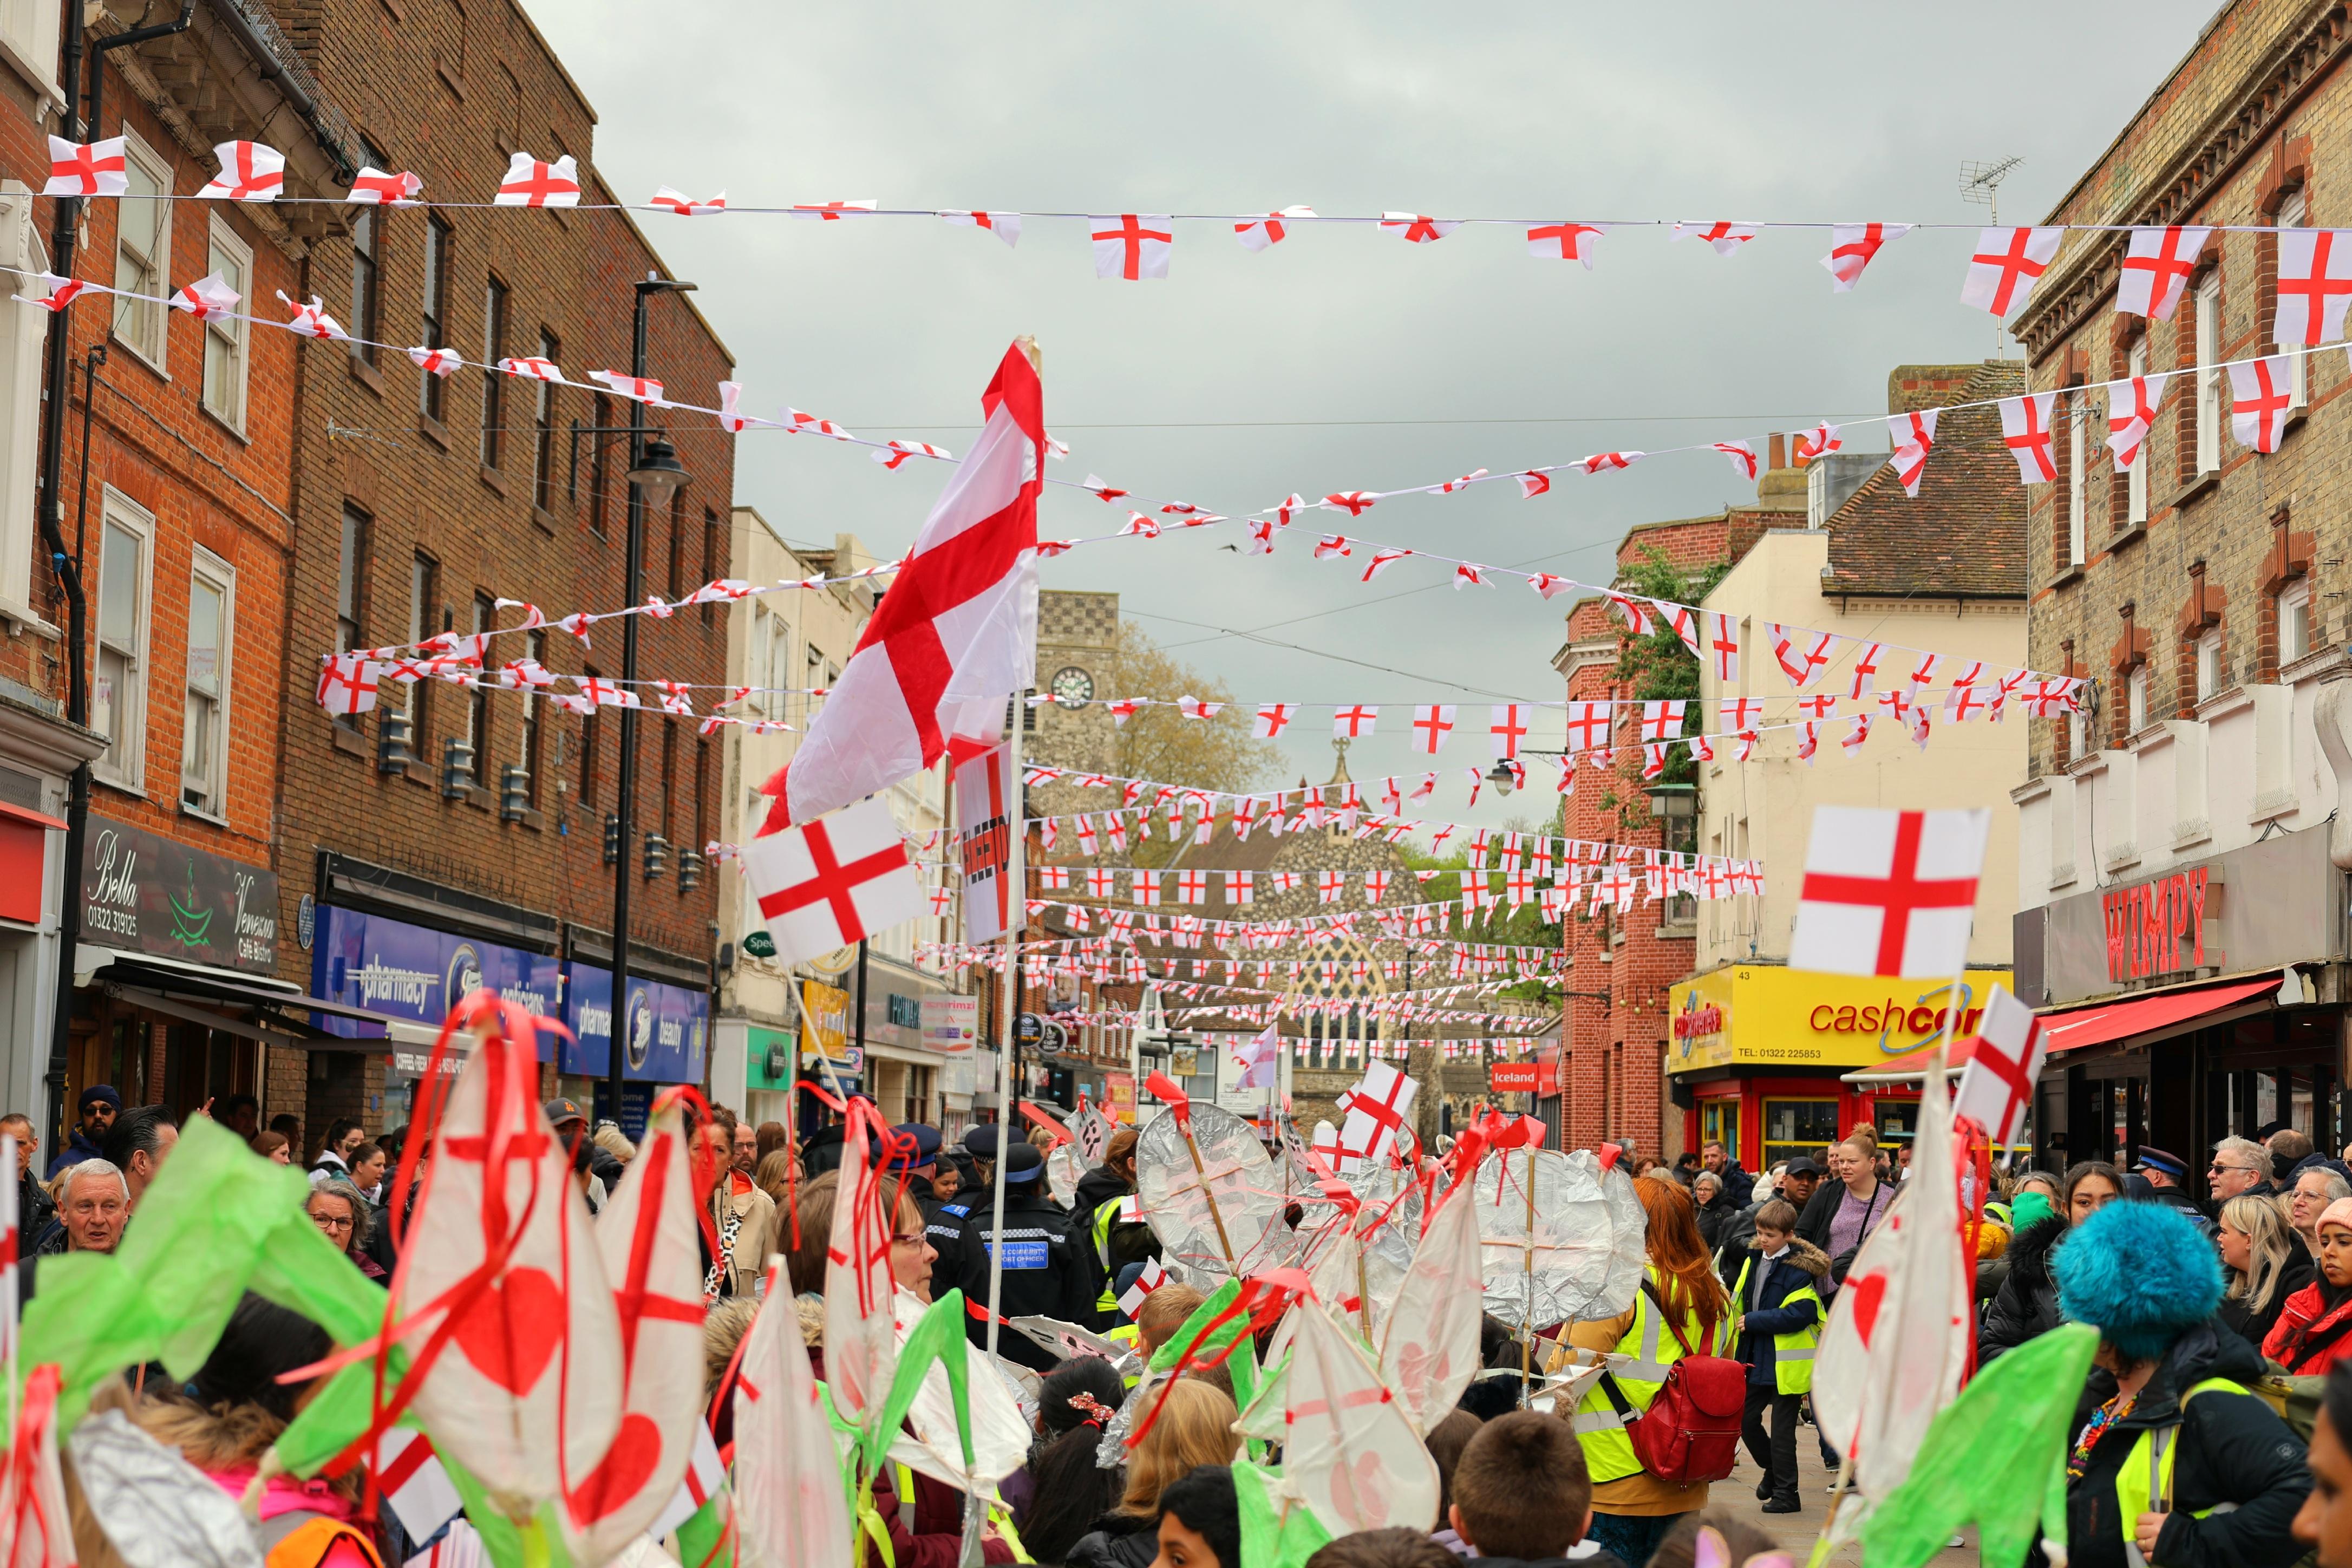 St George's Day parade through Dartford